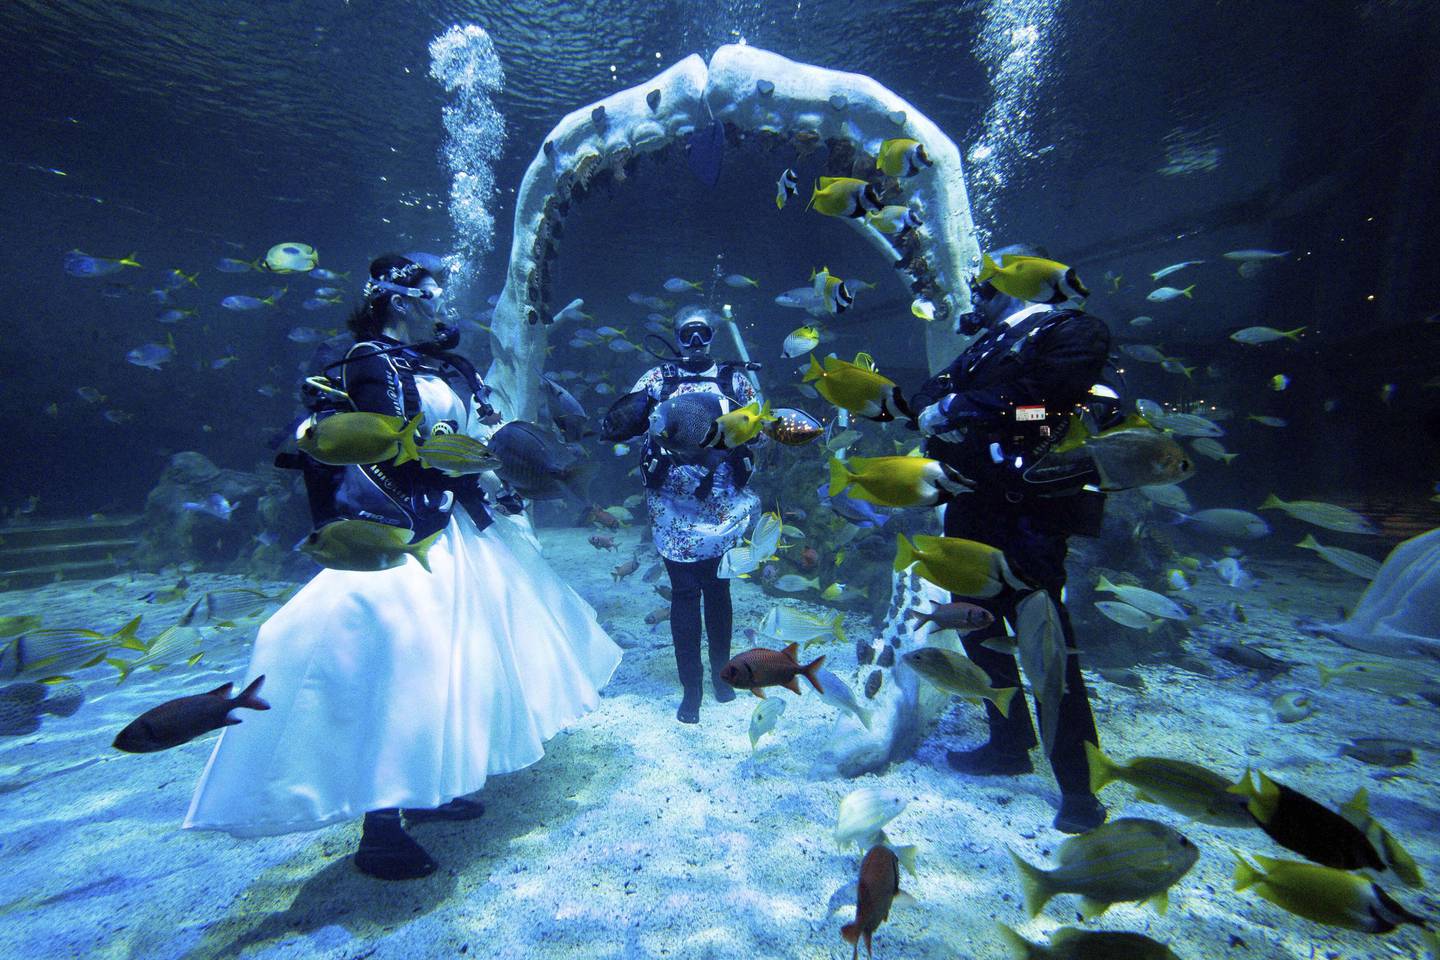 Lisa Huggins, left and Chris Jackson during their underwater wedding ceremony at Bear Grylls Adventure, in Birmingham. AP Photo